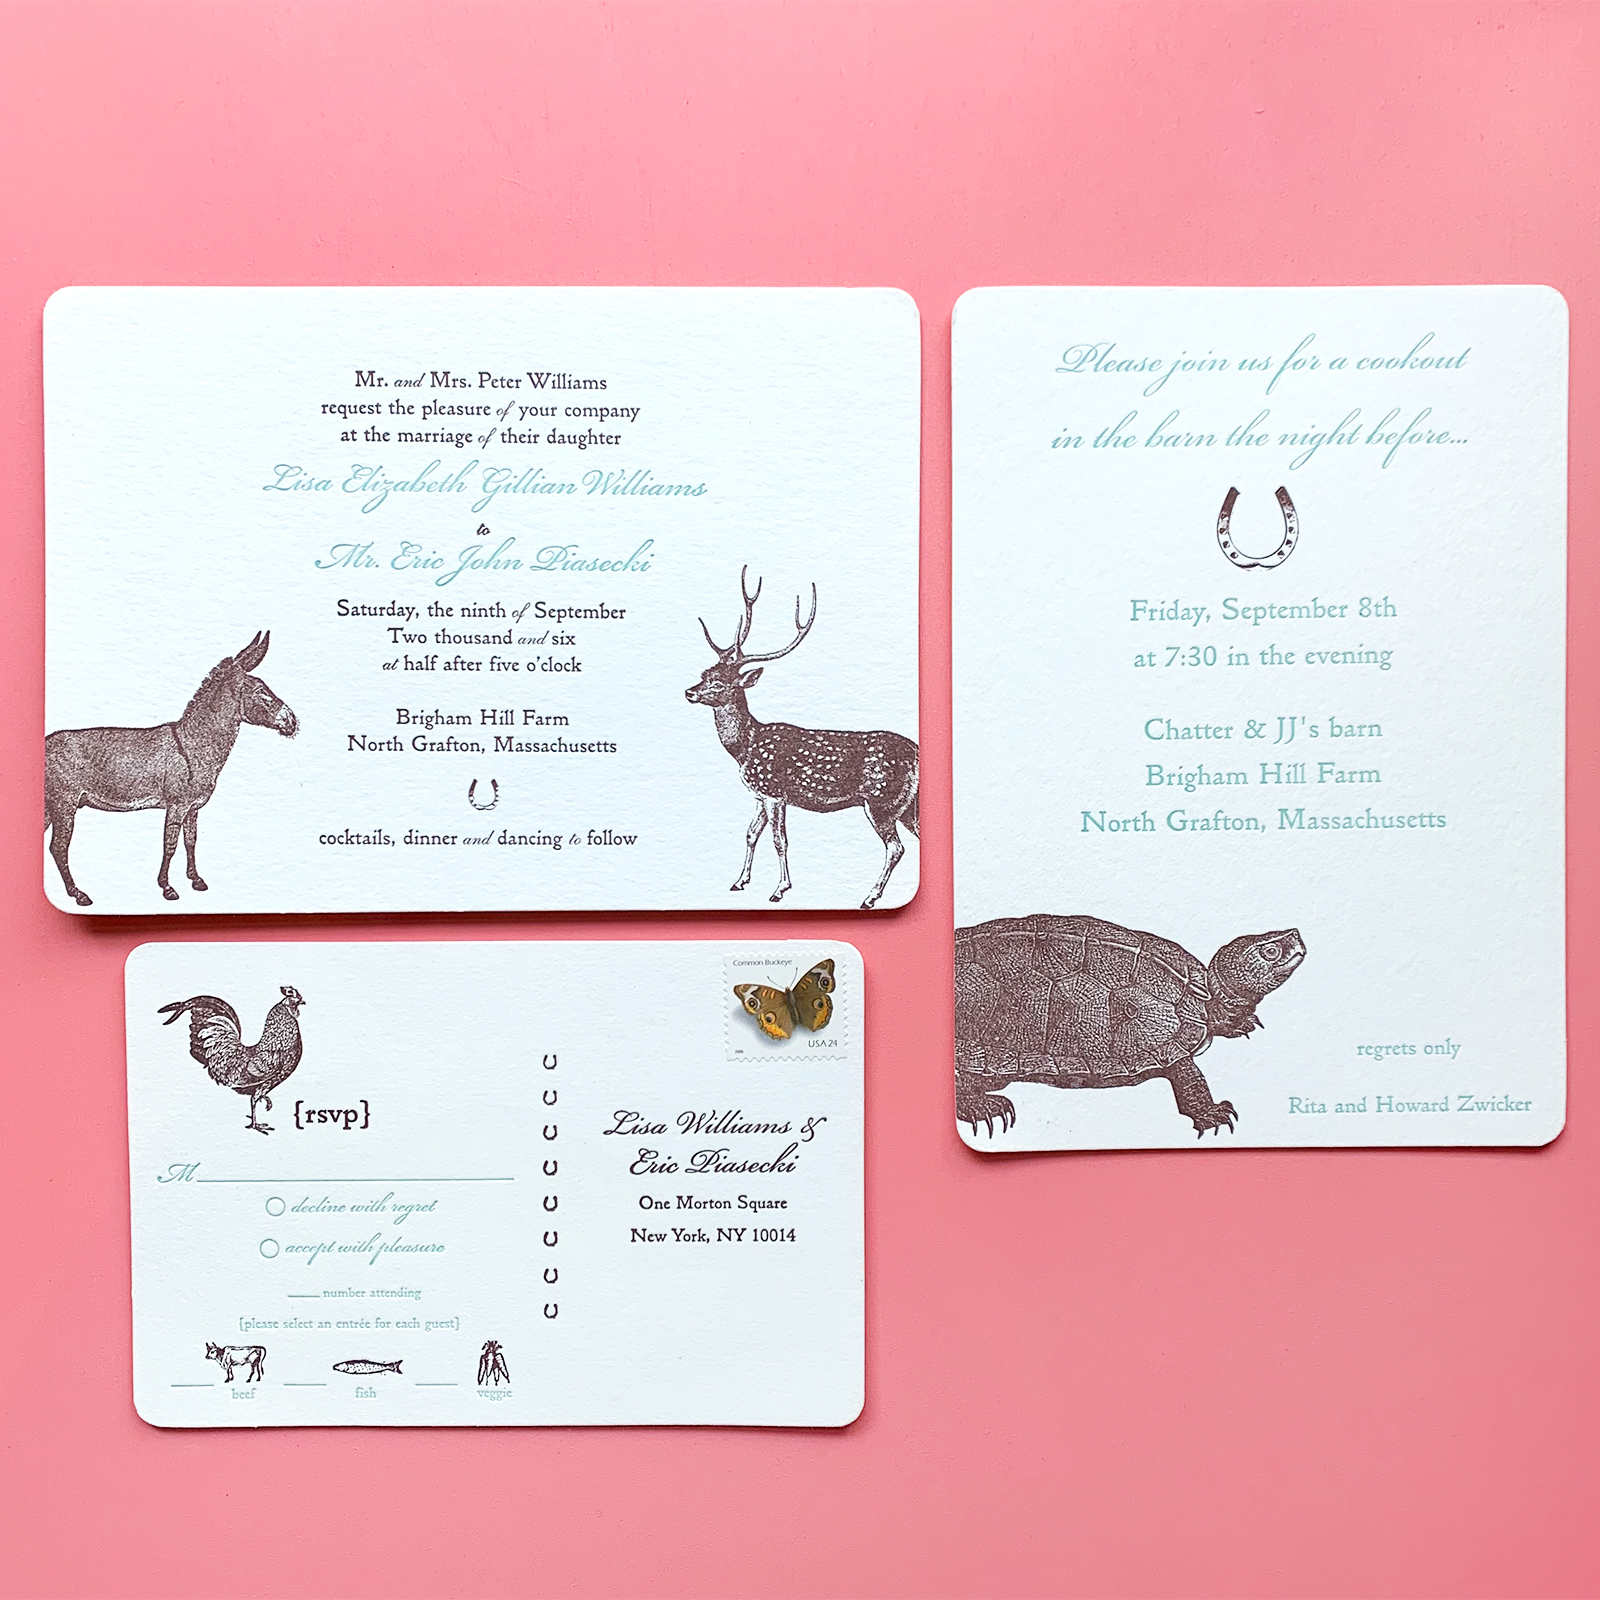 Letterpress wedding design featuring animals, farm wedding